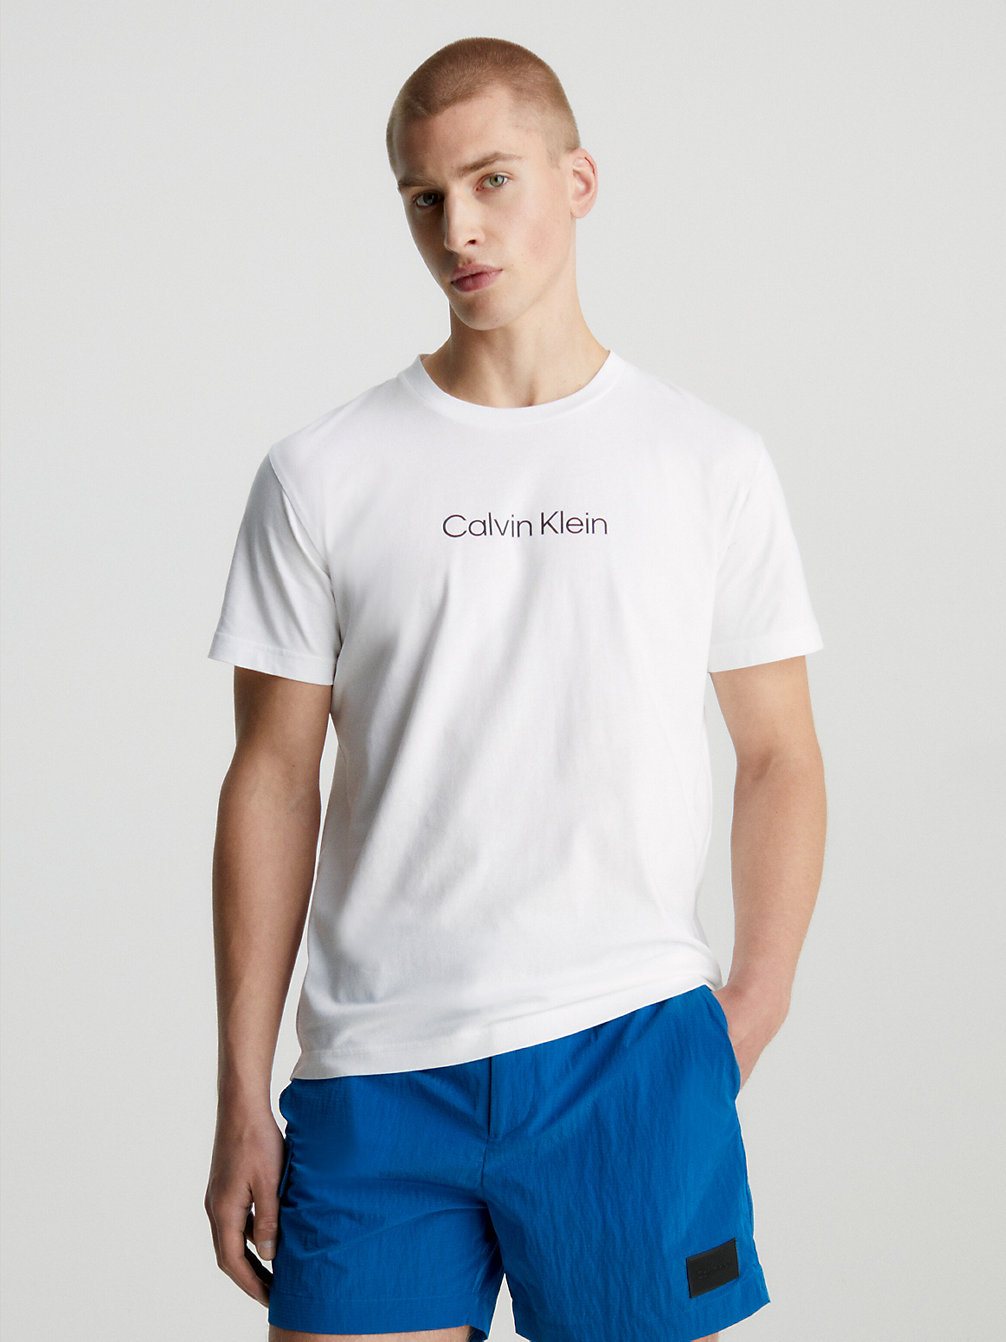 PVH CLASSIC WHITE > T-Shirt Plażowy > undefined Mężczyźni - Calvin Klein